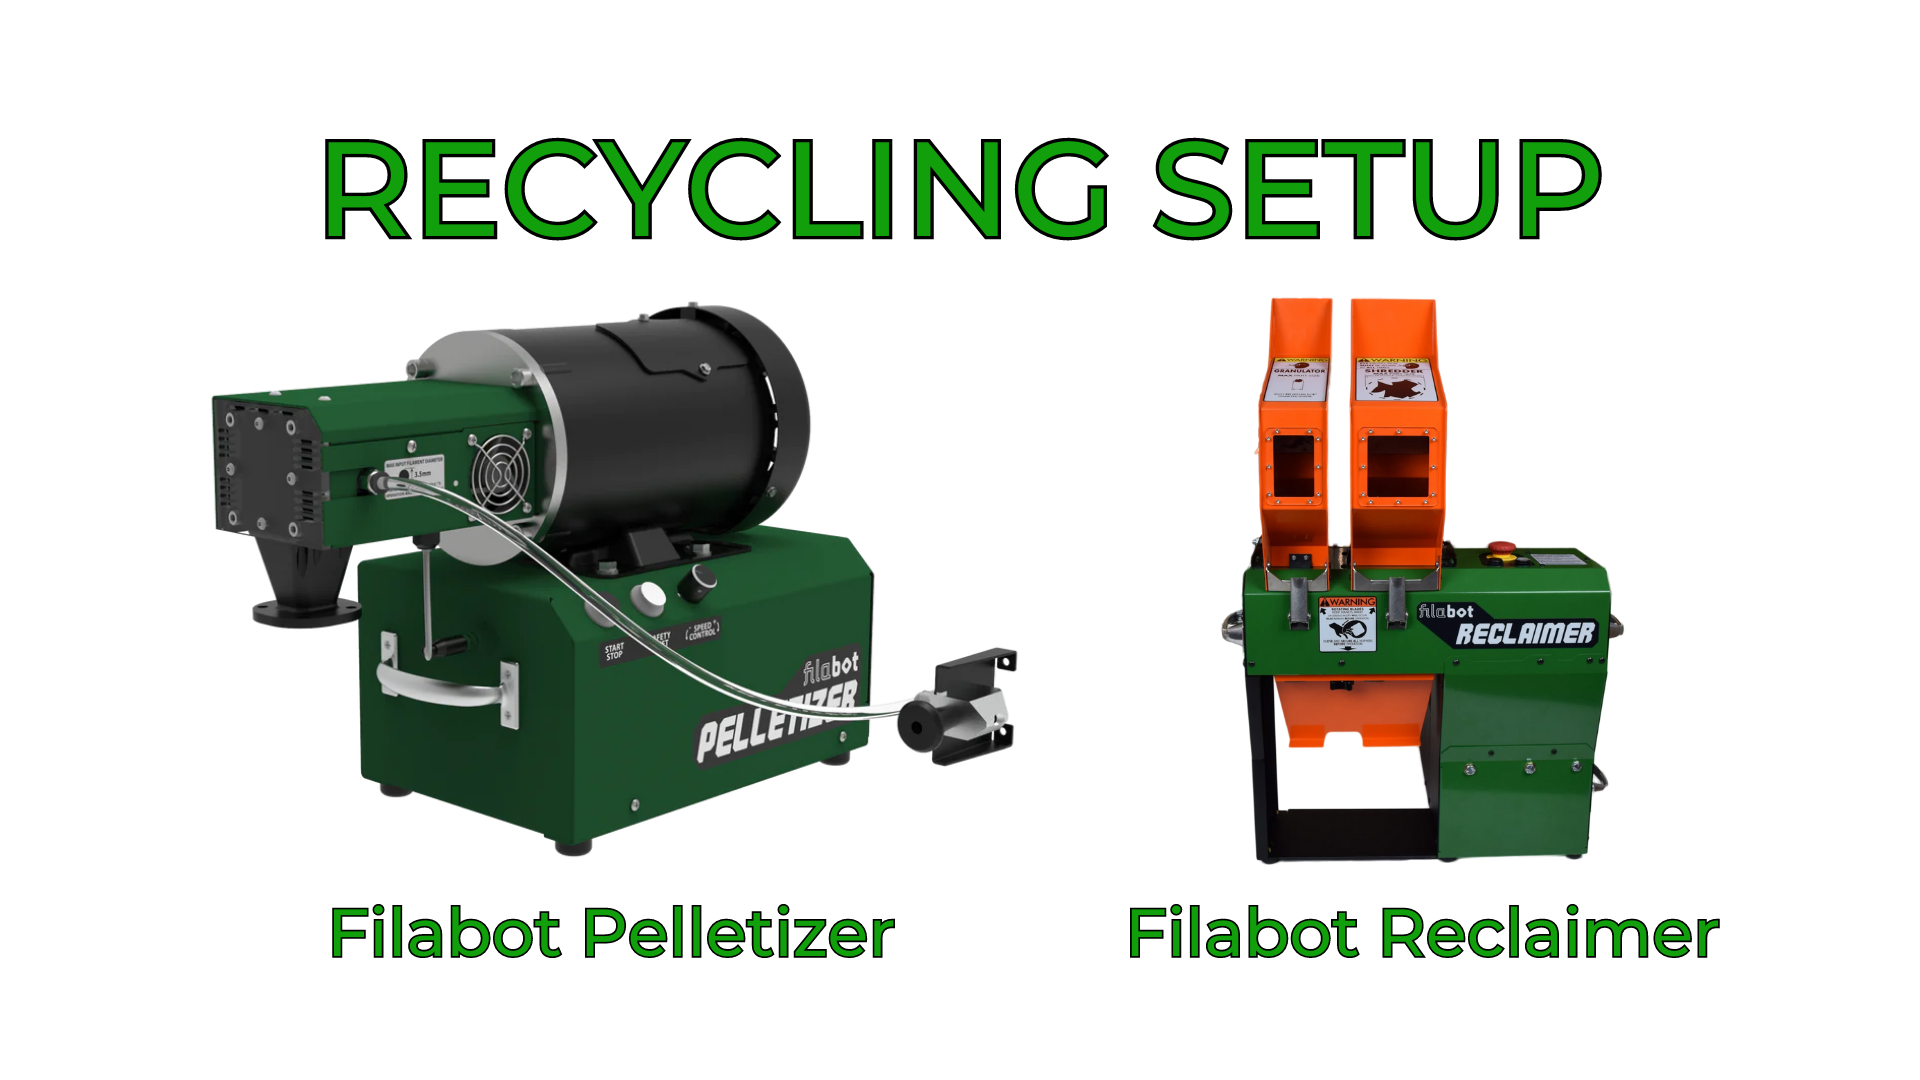 Recycling Setup - Filabot Reclaimer and Filabot Pelletizer